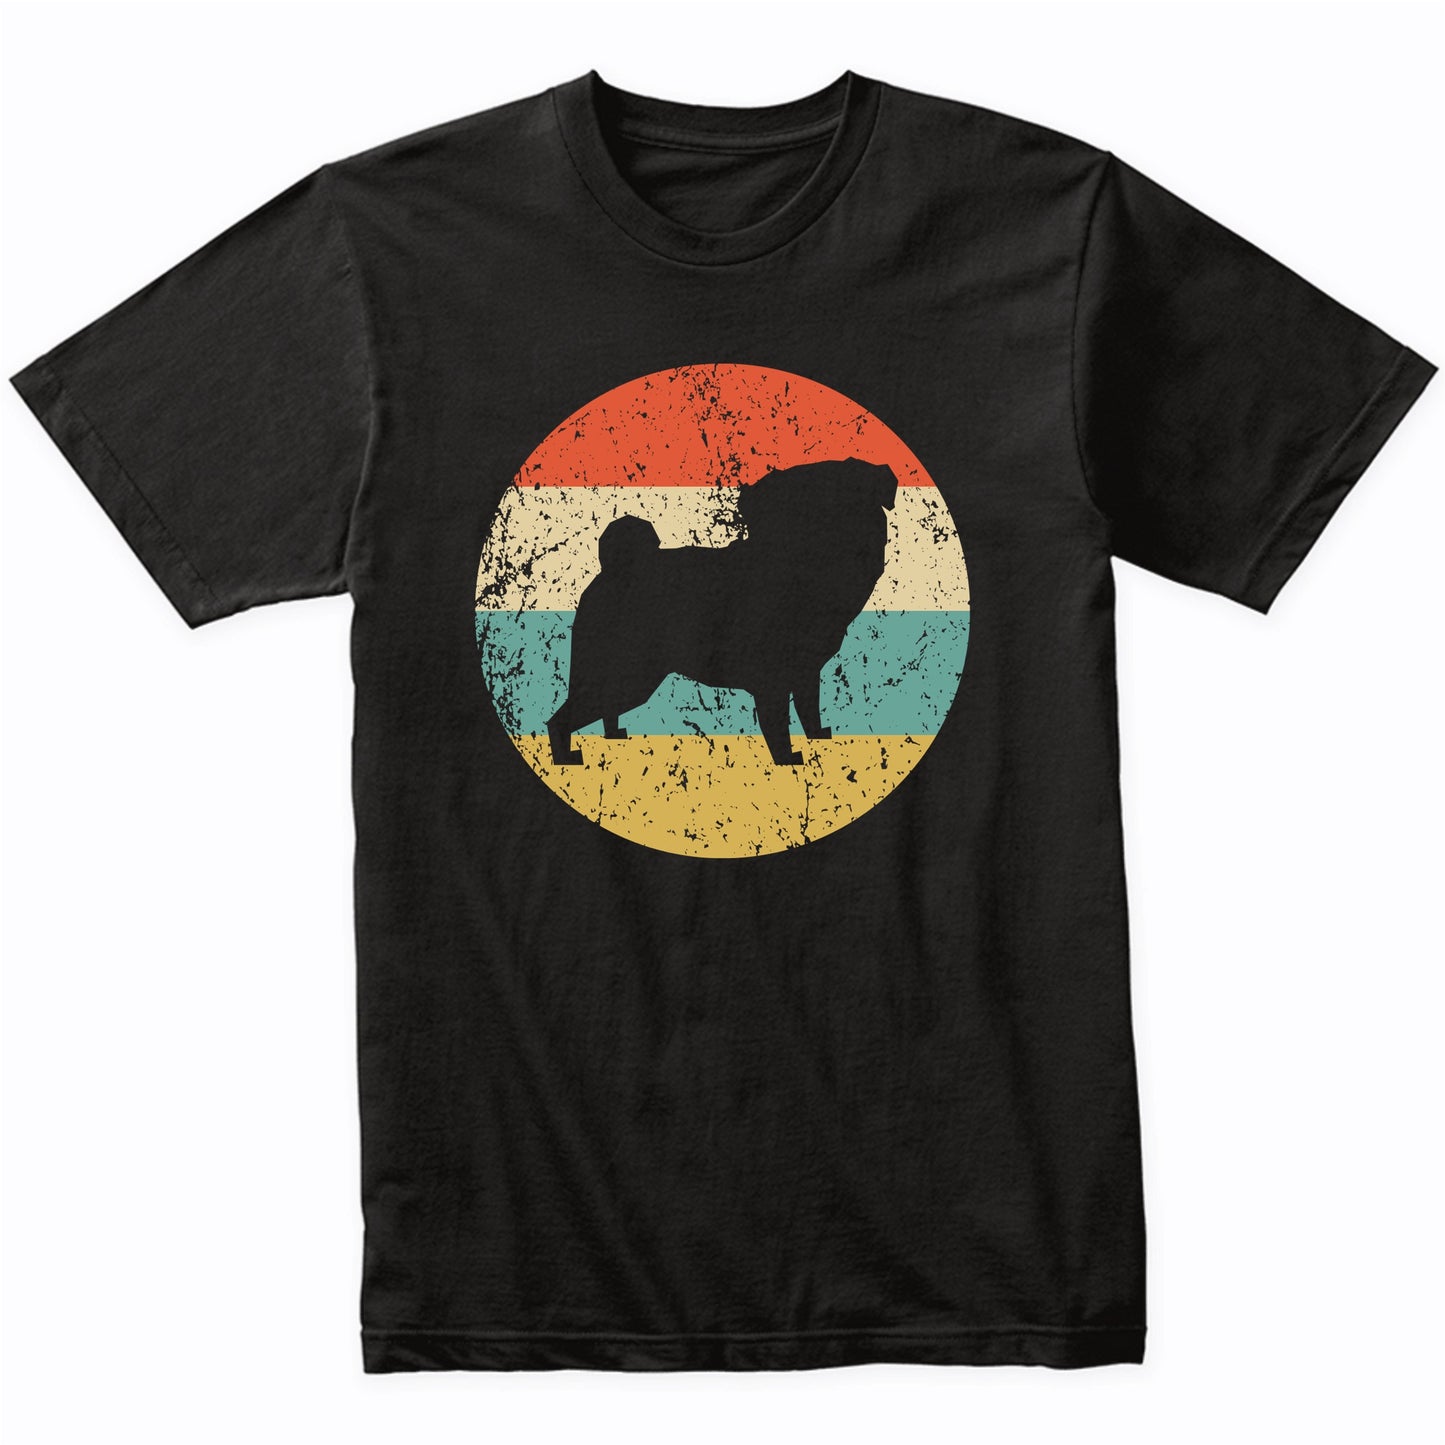 Pug Shirt - Vintage Retro Pug Dog T-Shirt